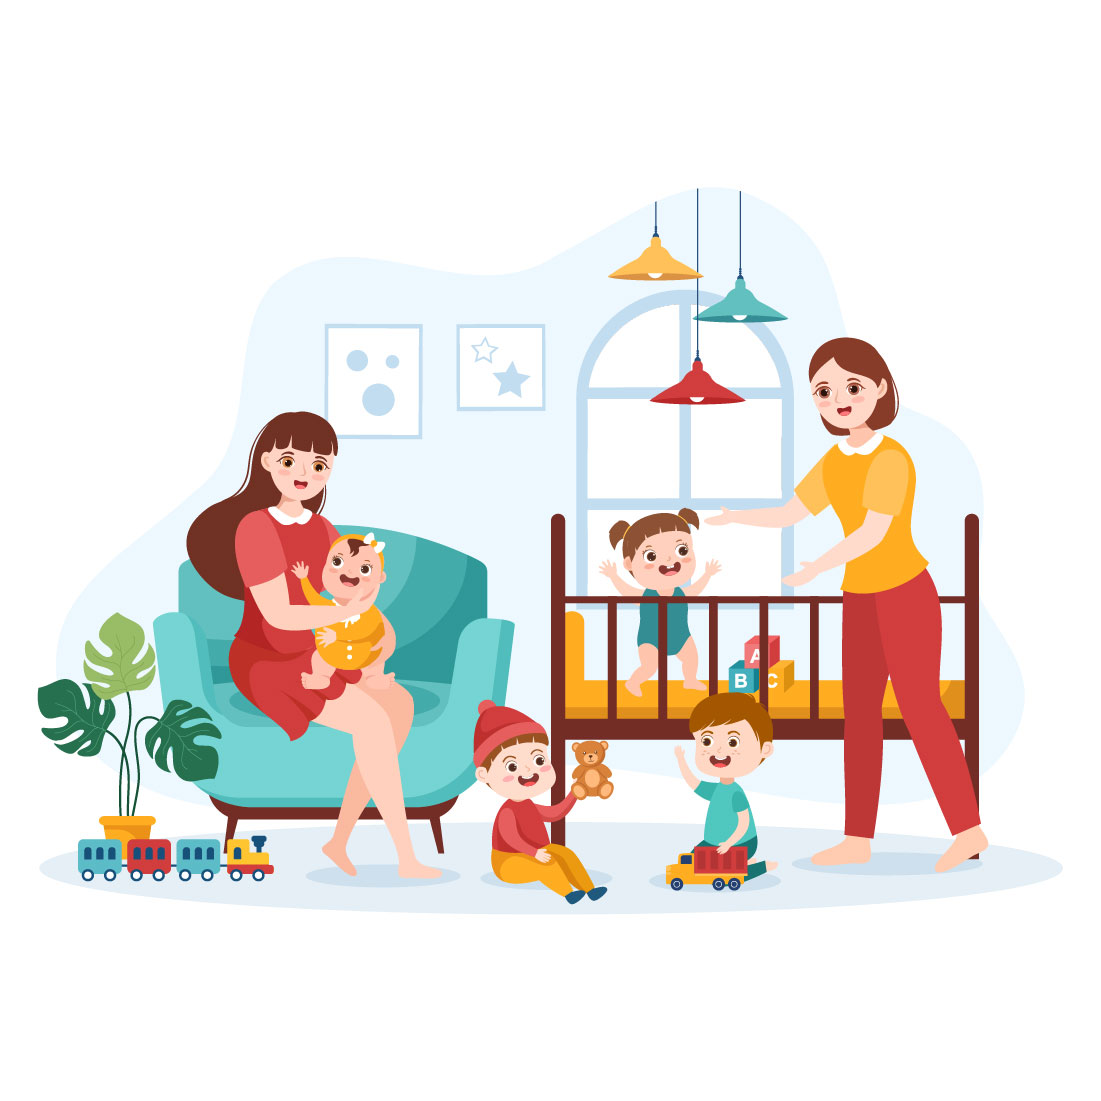 Babysitter or Nanny Services Cartoon Illustration cover image.